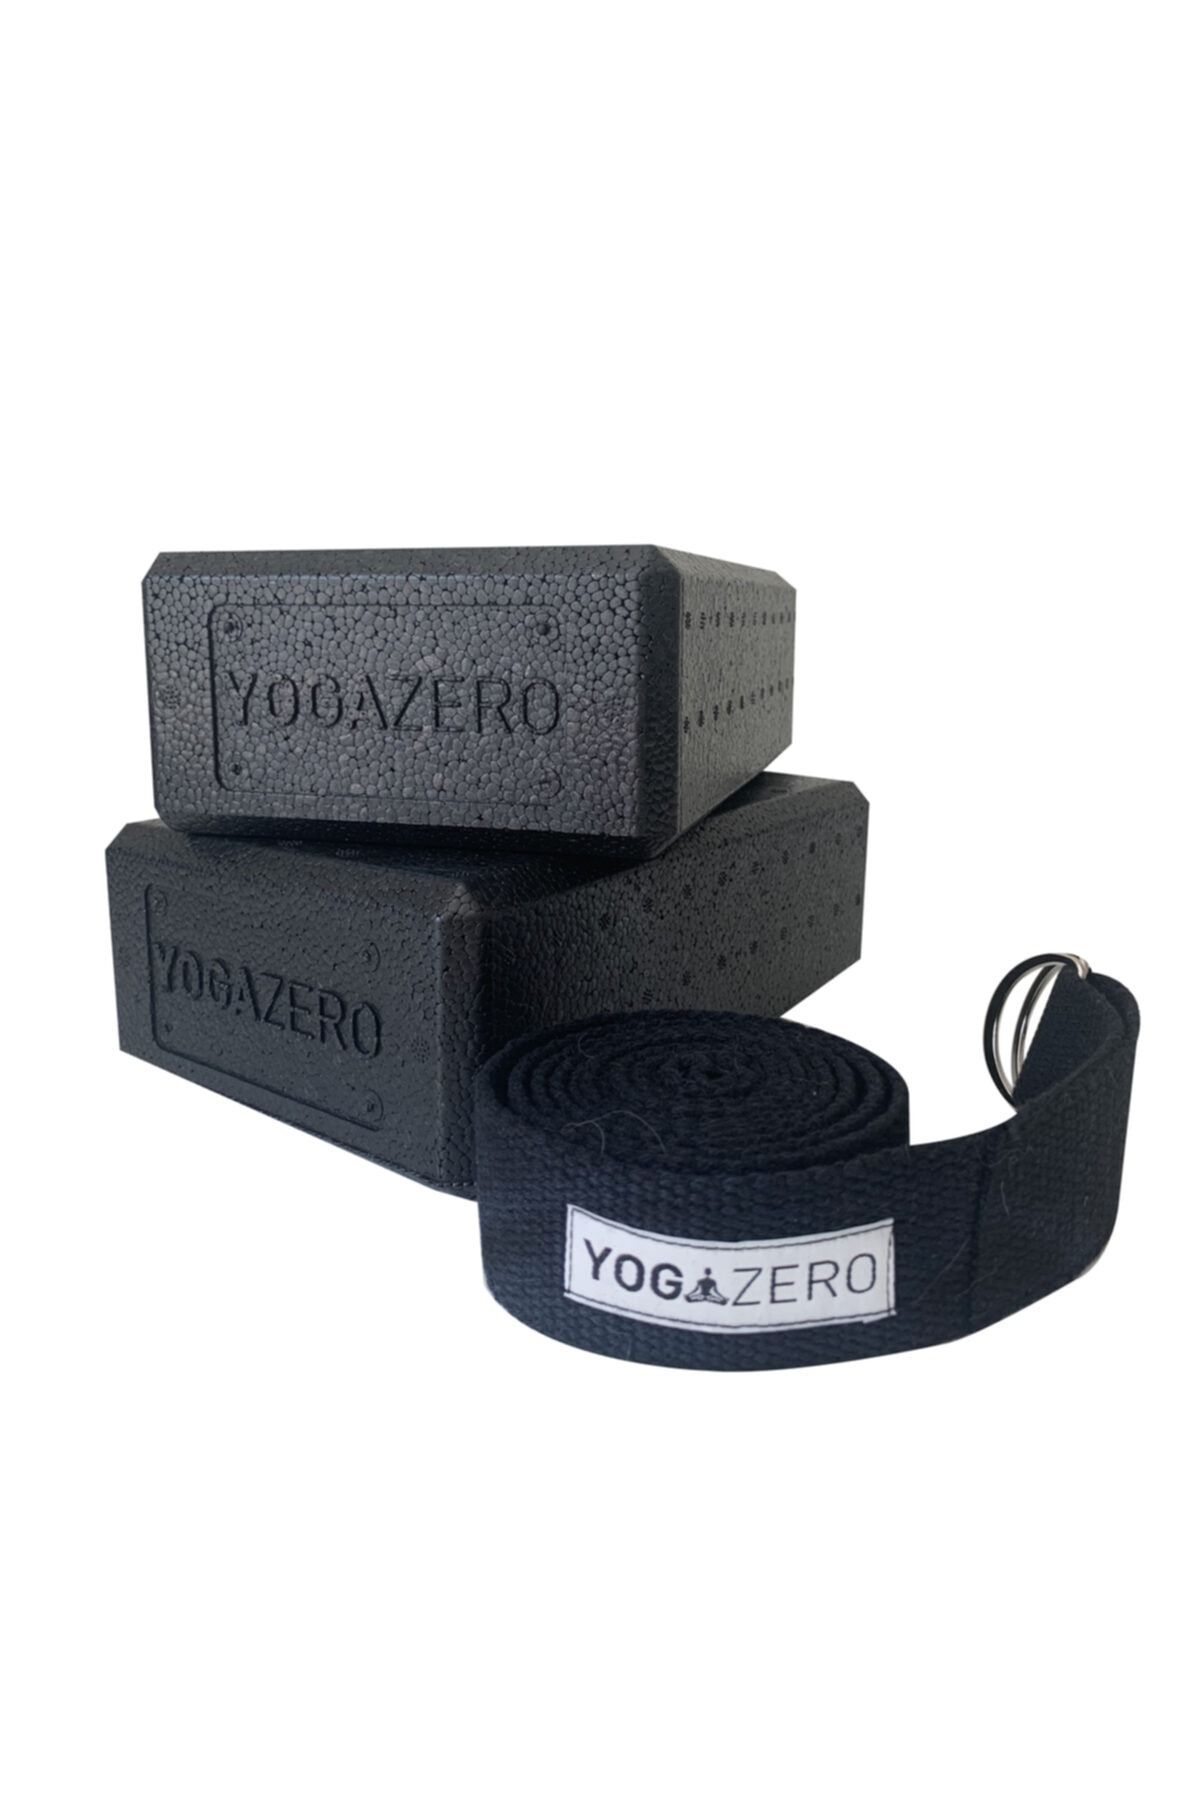 Yoga Zero Siyah Köpük Blok Ve Siyah Renk Yoga Kemer 2 Adet